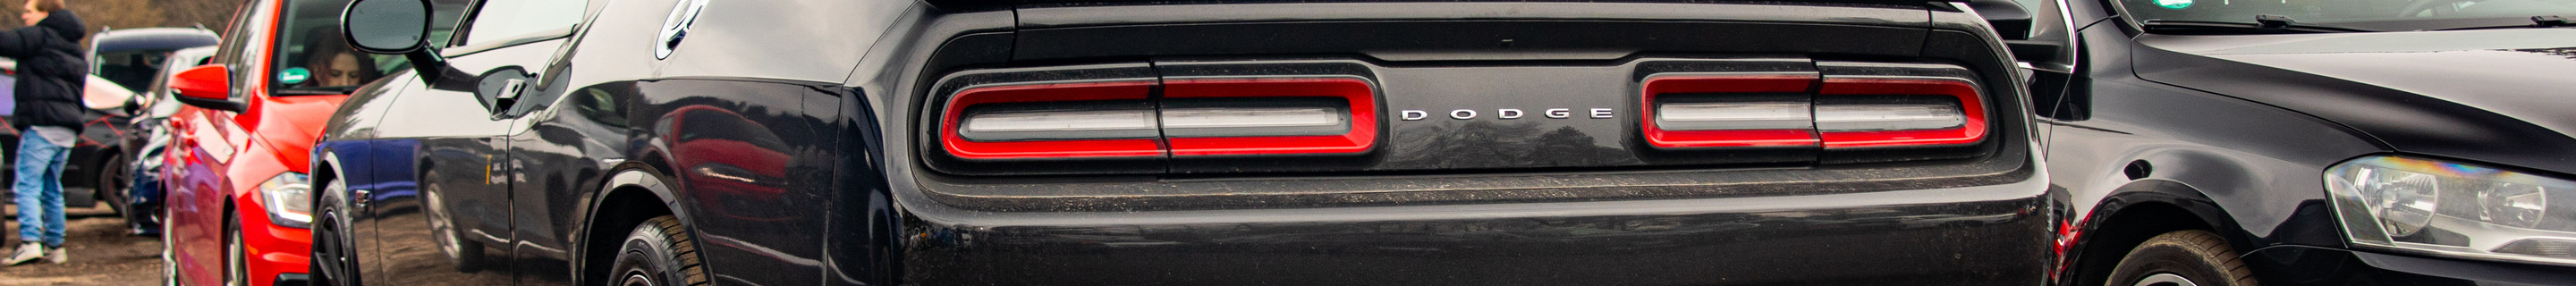 Dodge Challenger SRT 392 2015